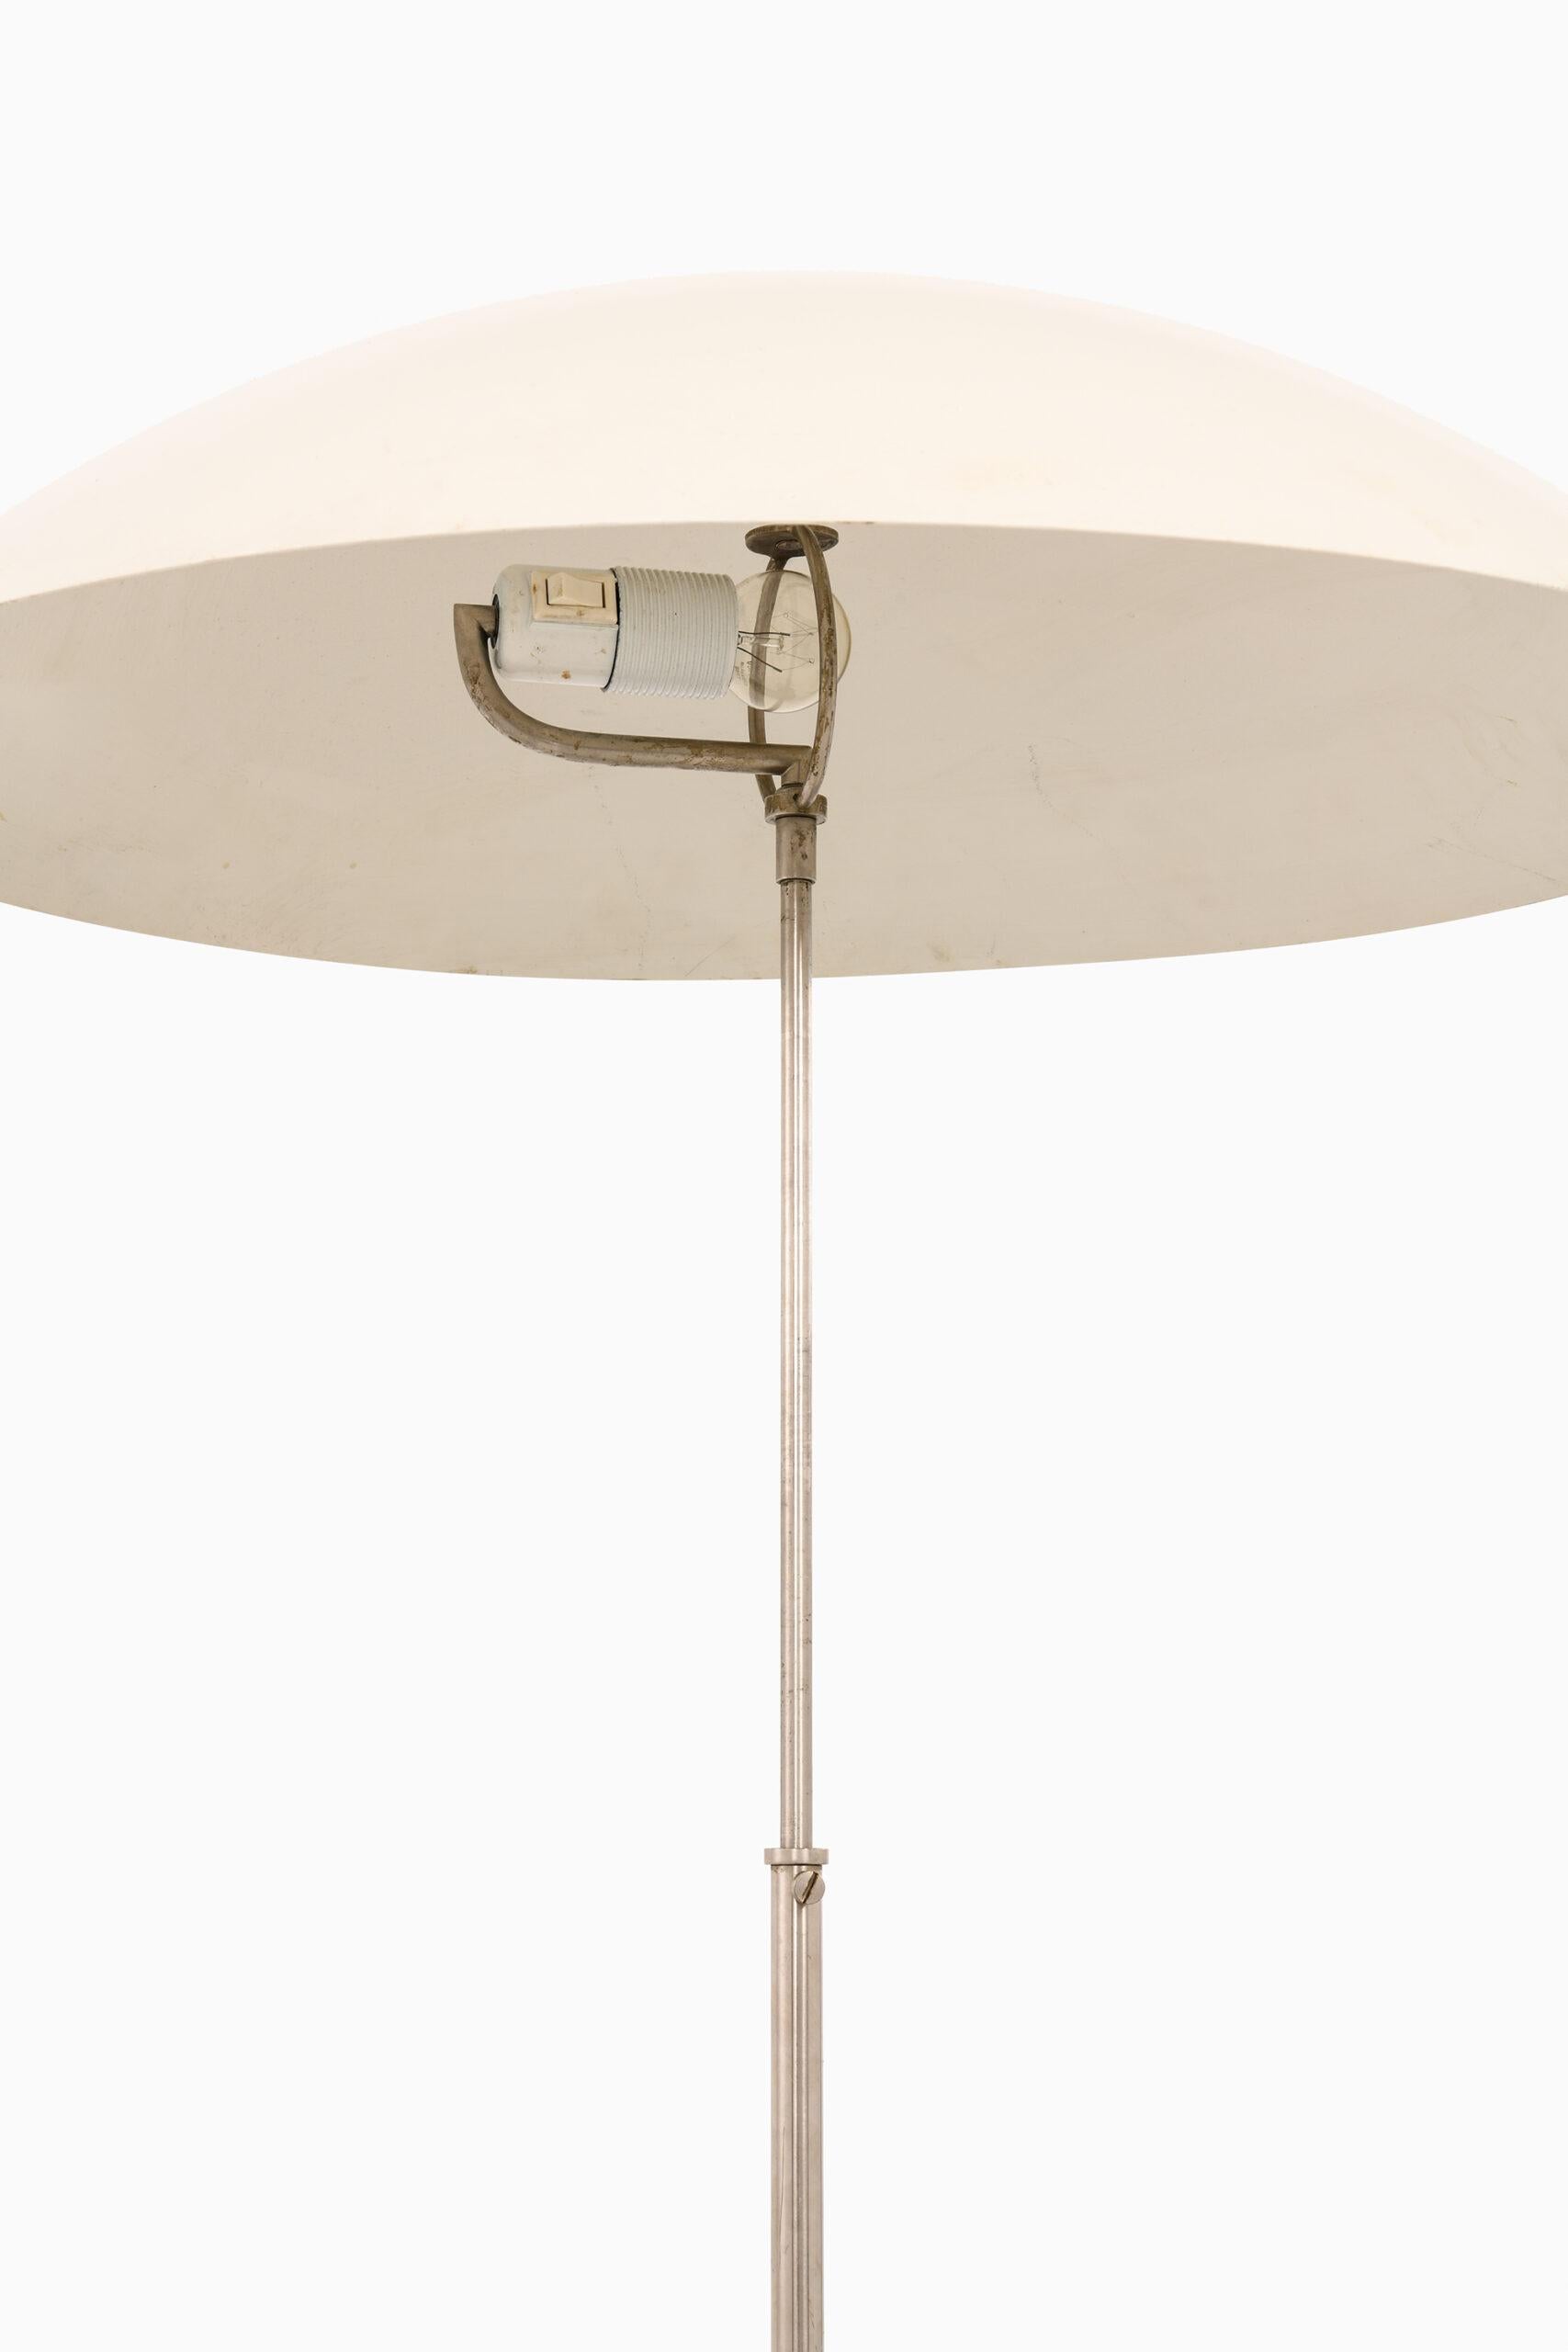 Scandinavian Modern Margareta Köhler Floor Lamp Produced by Futurum For Sale